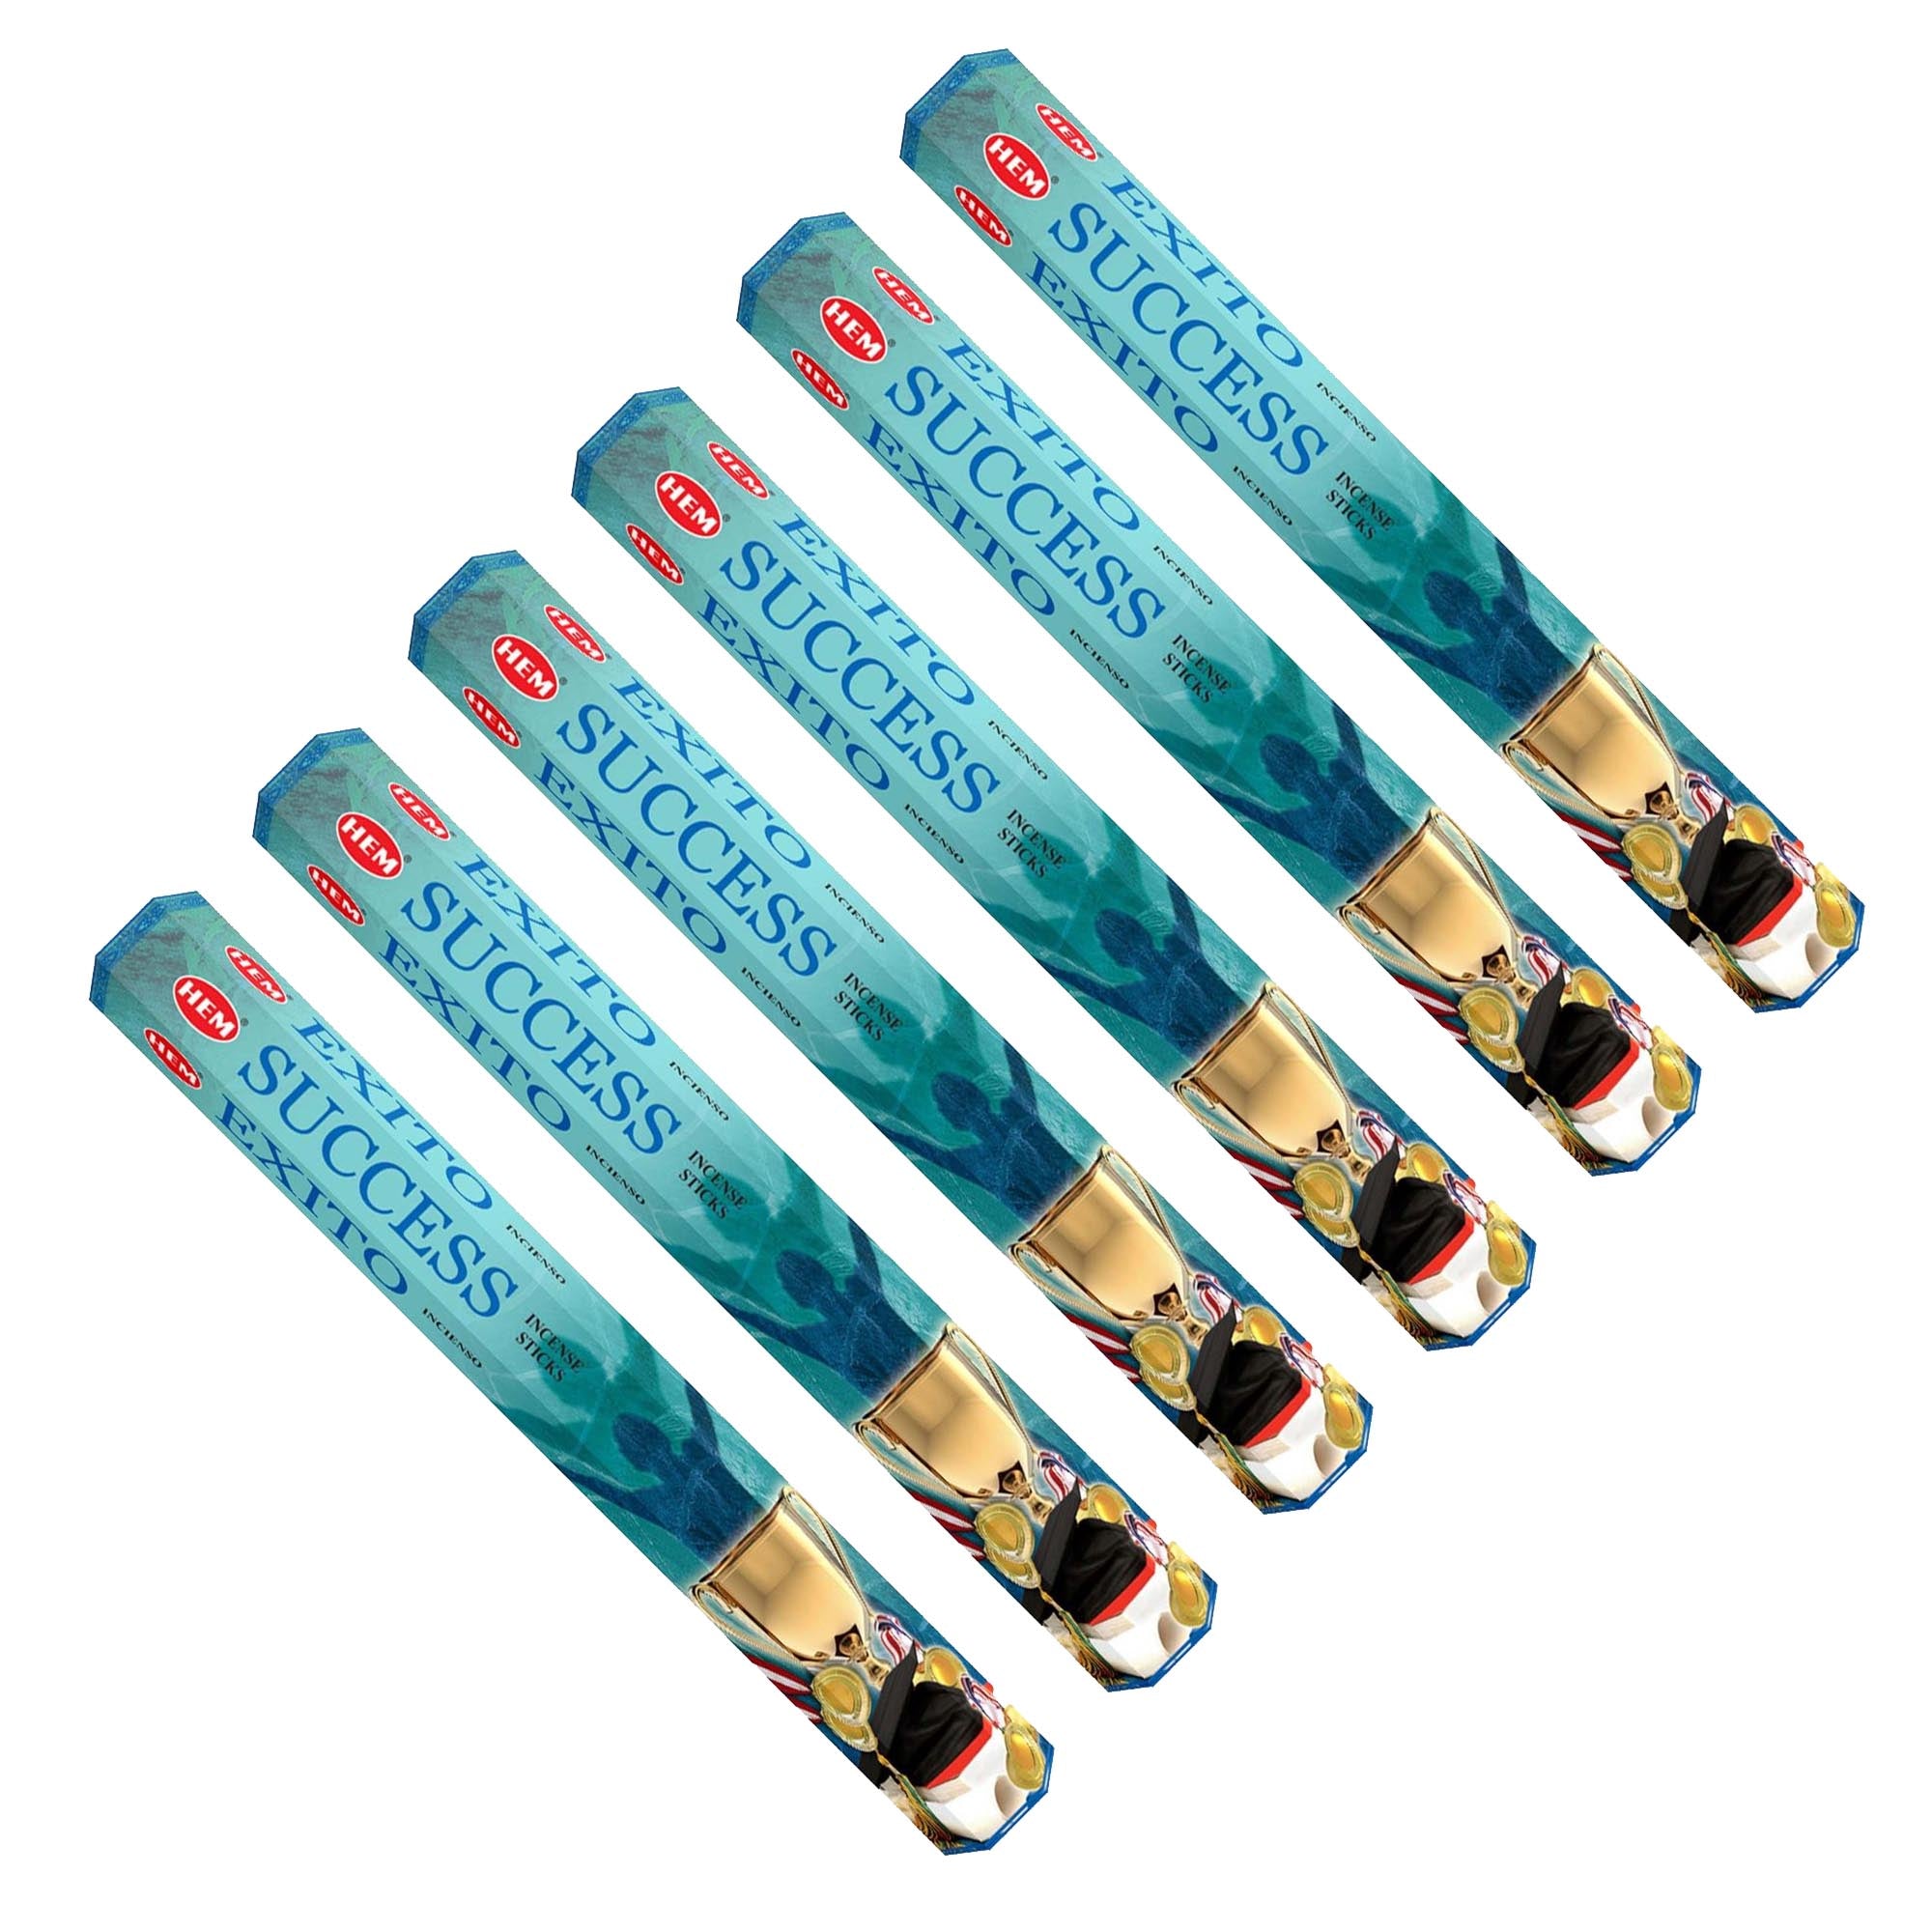 HEM - Hexagon - Success Incense Sticks